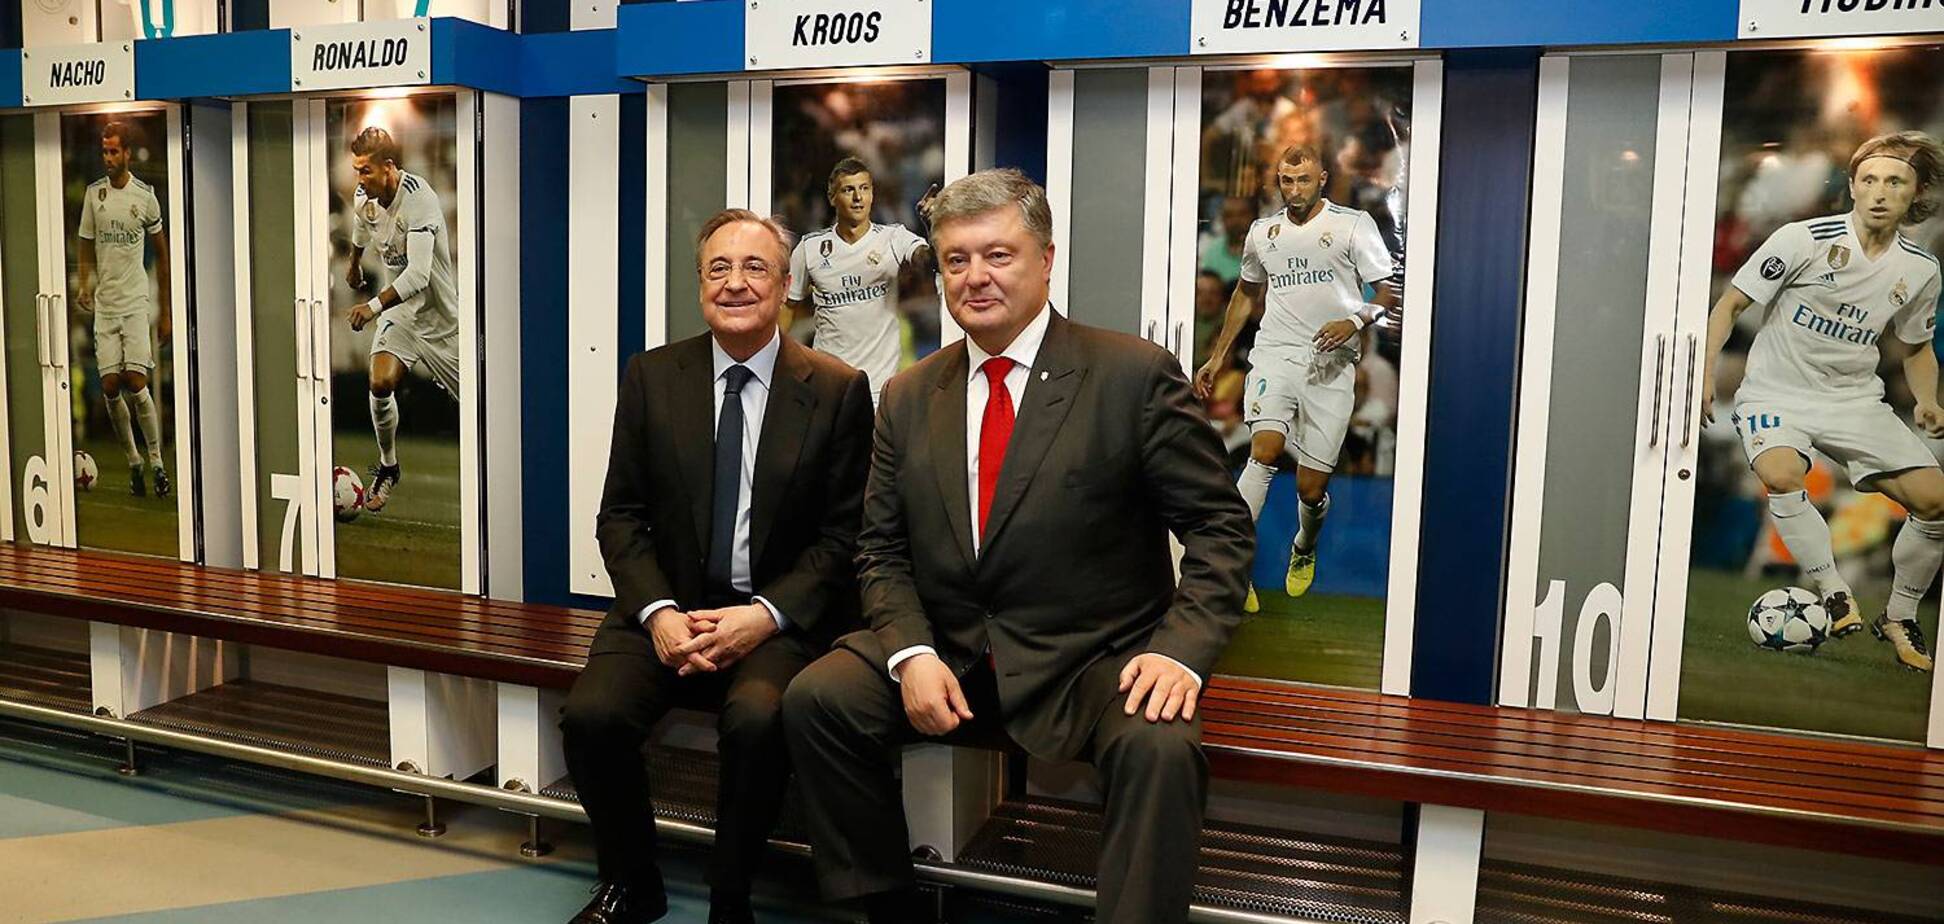 'Poroshenko 1': 'Реал' отметил президента Украины - фотофакт